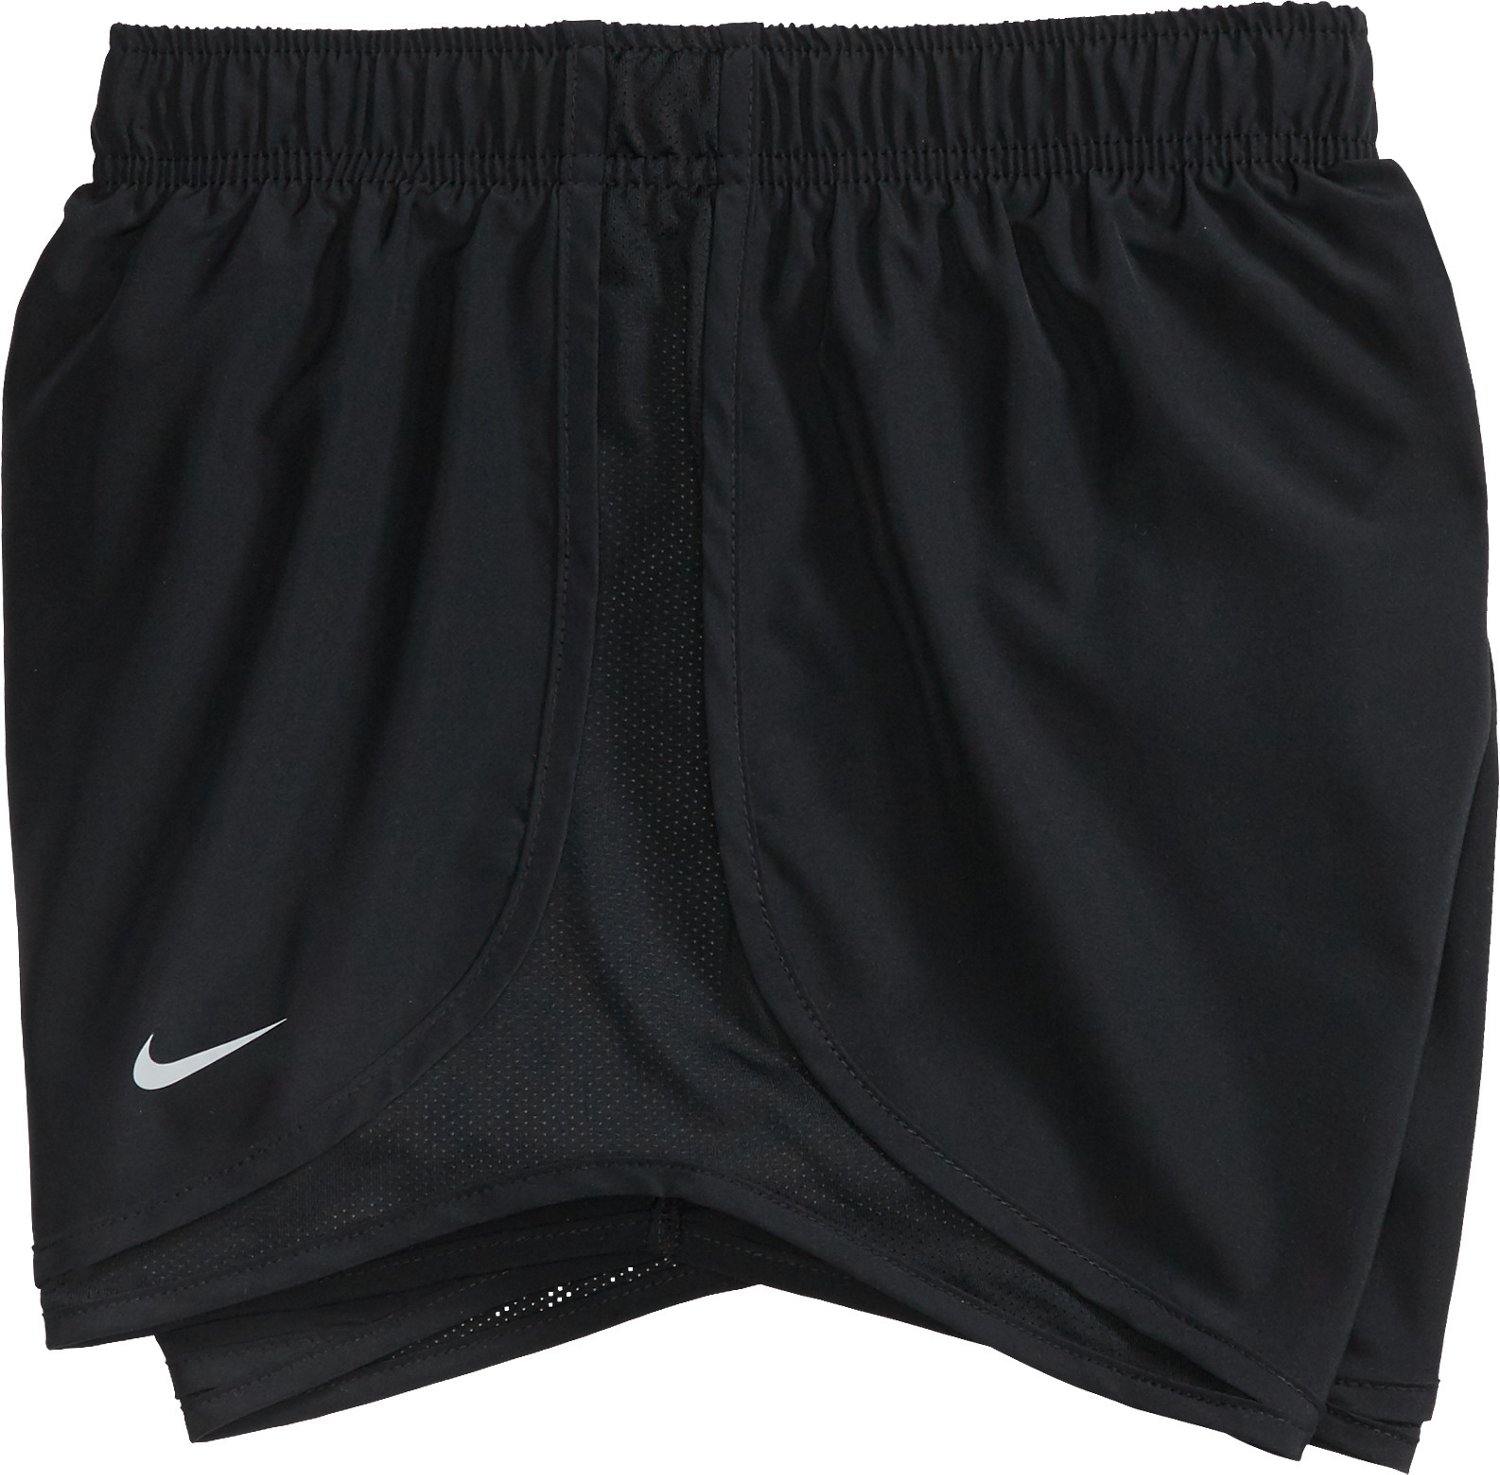 Nike Women's Dry Tempo Shorts | Academy